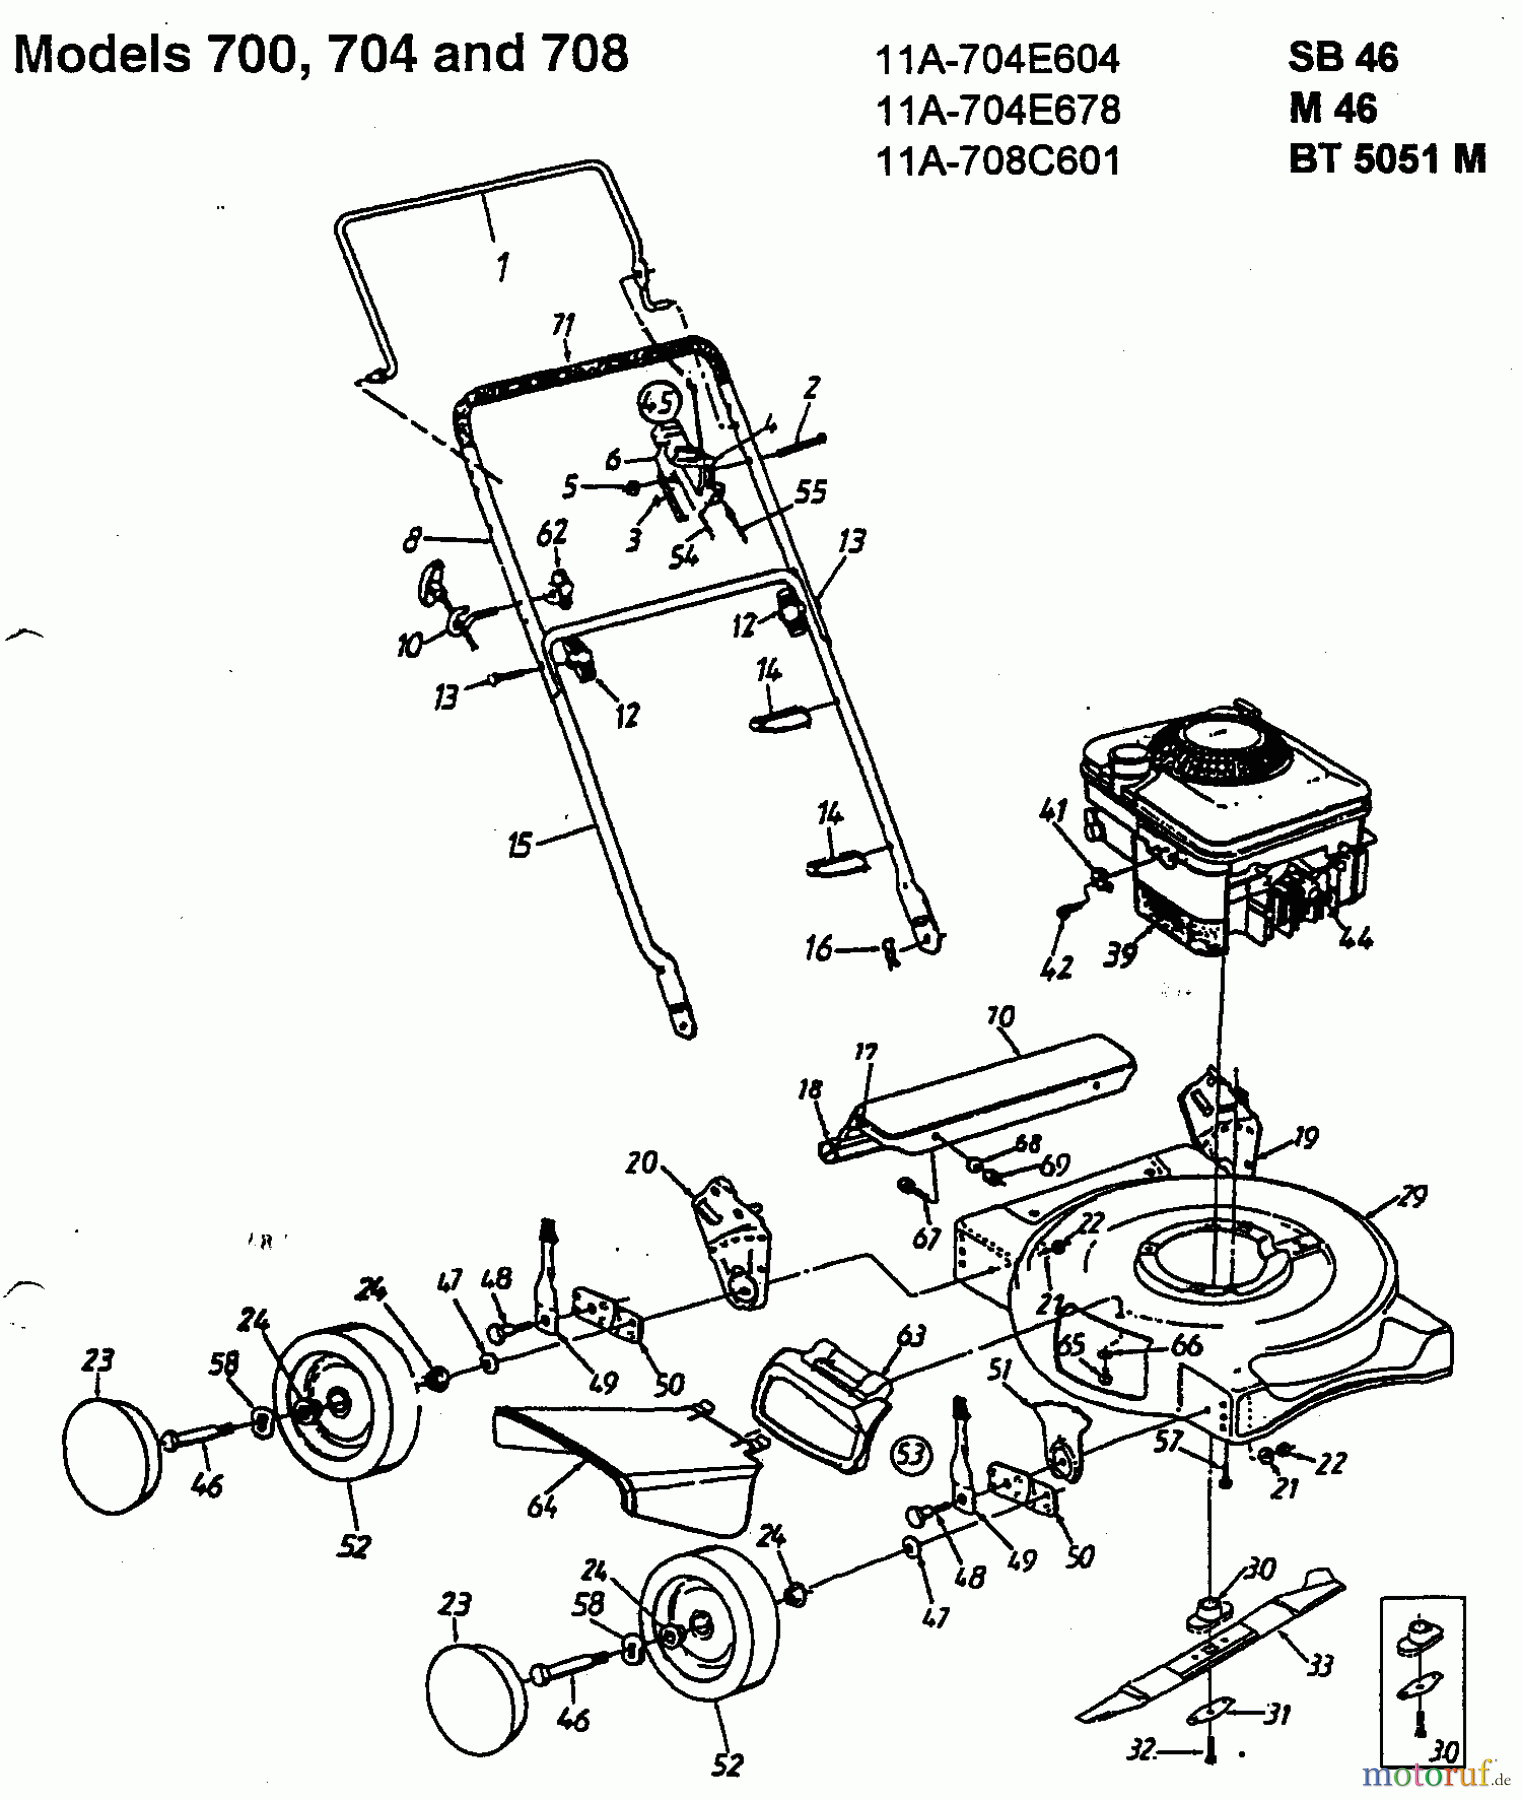  Gutbrod Motormäher SB 46 11A-704E604  (1998) Grundgerät